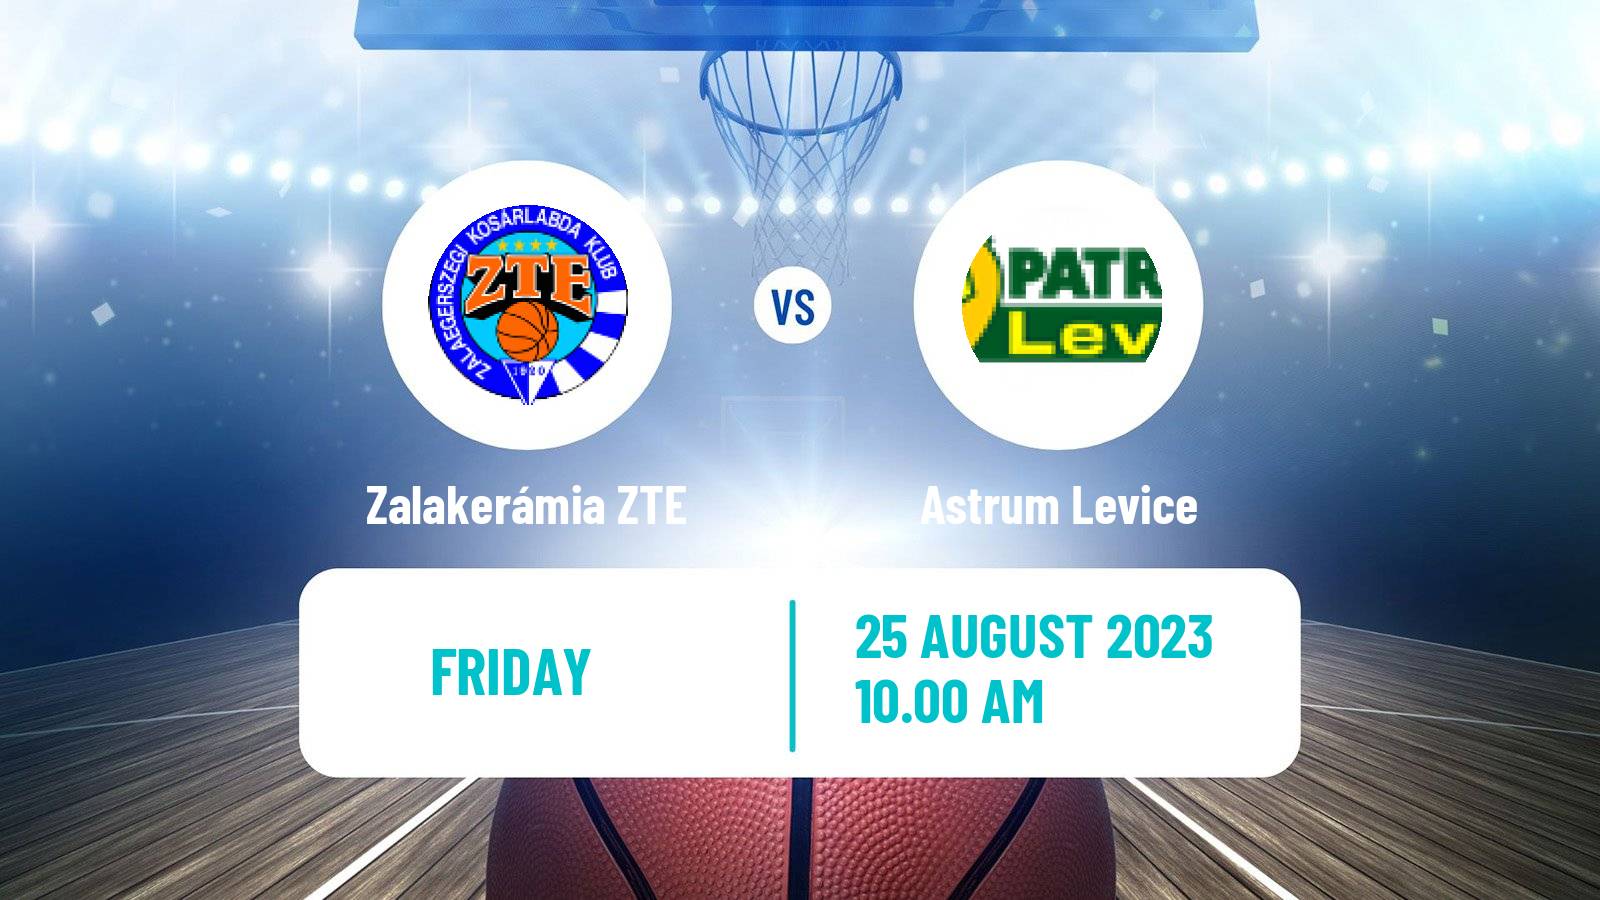 Basketball Club Friendly Basketball Zalakerámia ZTE - Astrum Levice